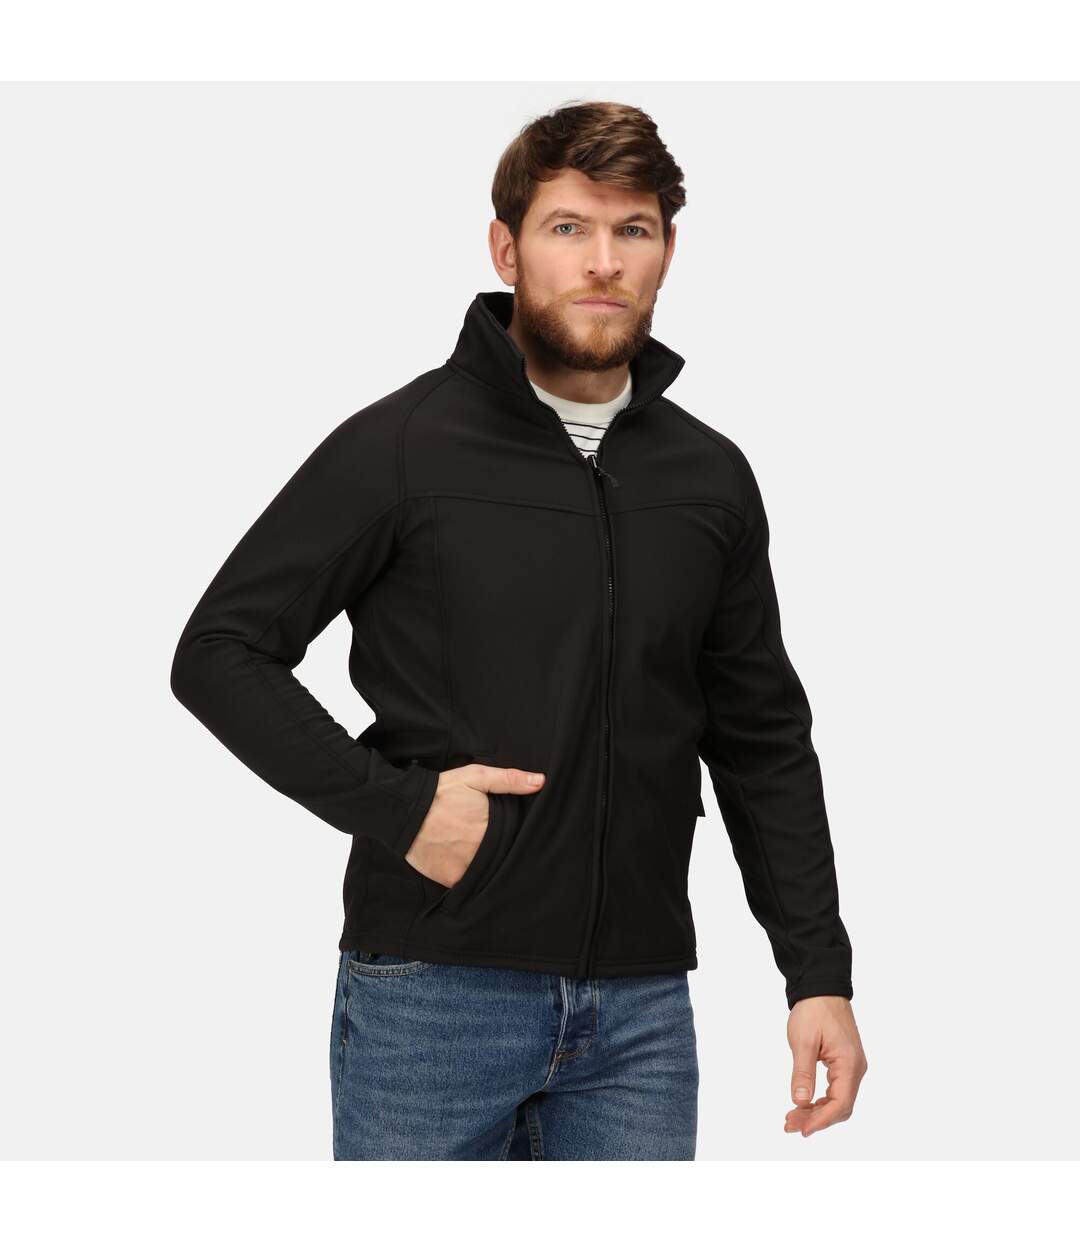 Regatta Uproar Mens Softshell Wind Resistant Fleece Jacket (All Black)